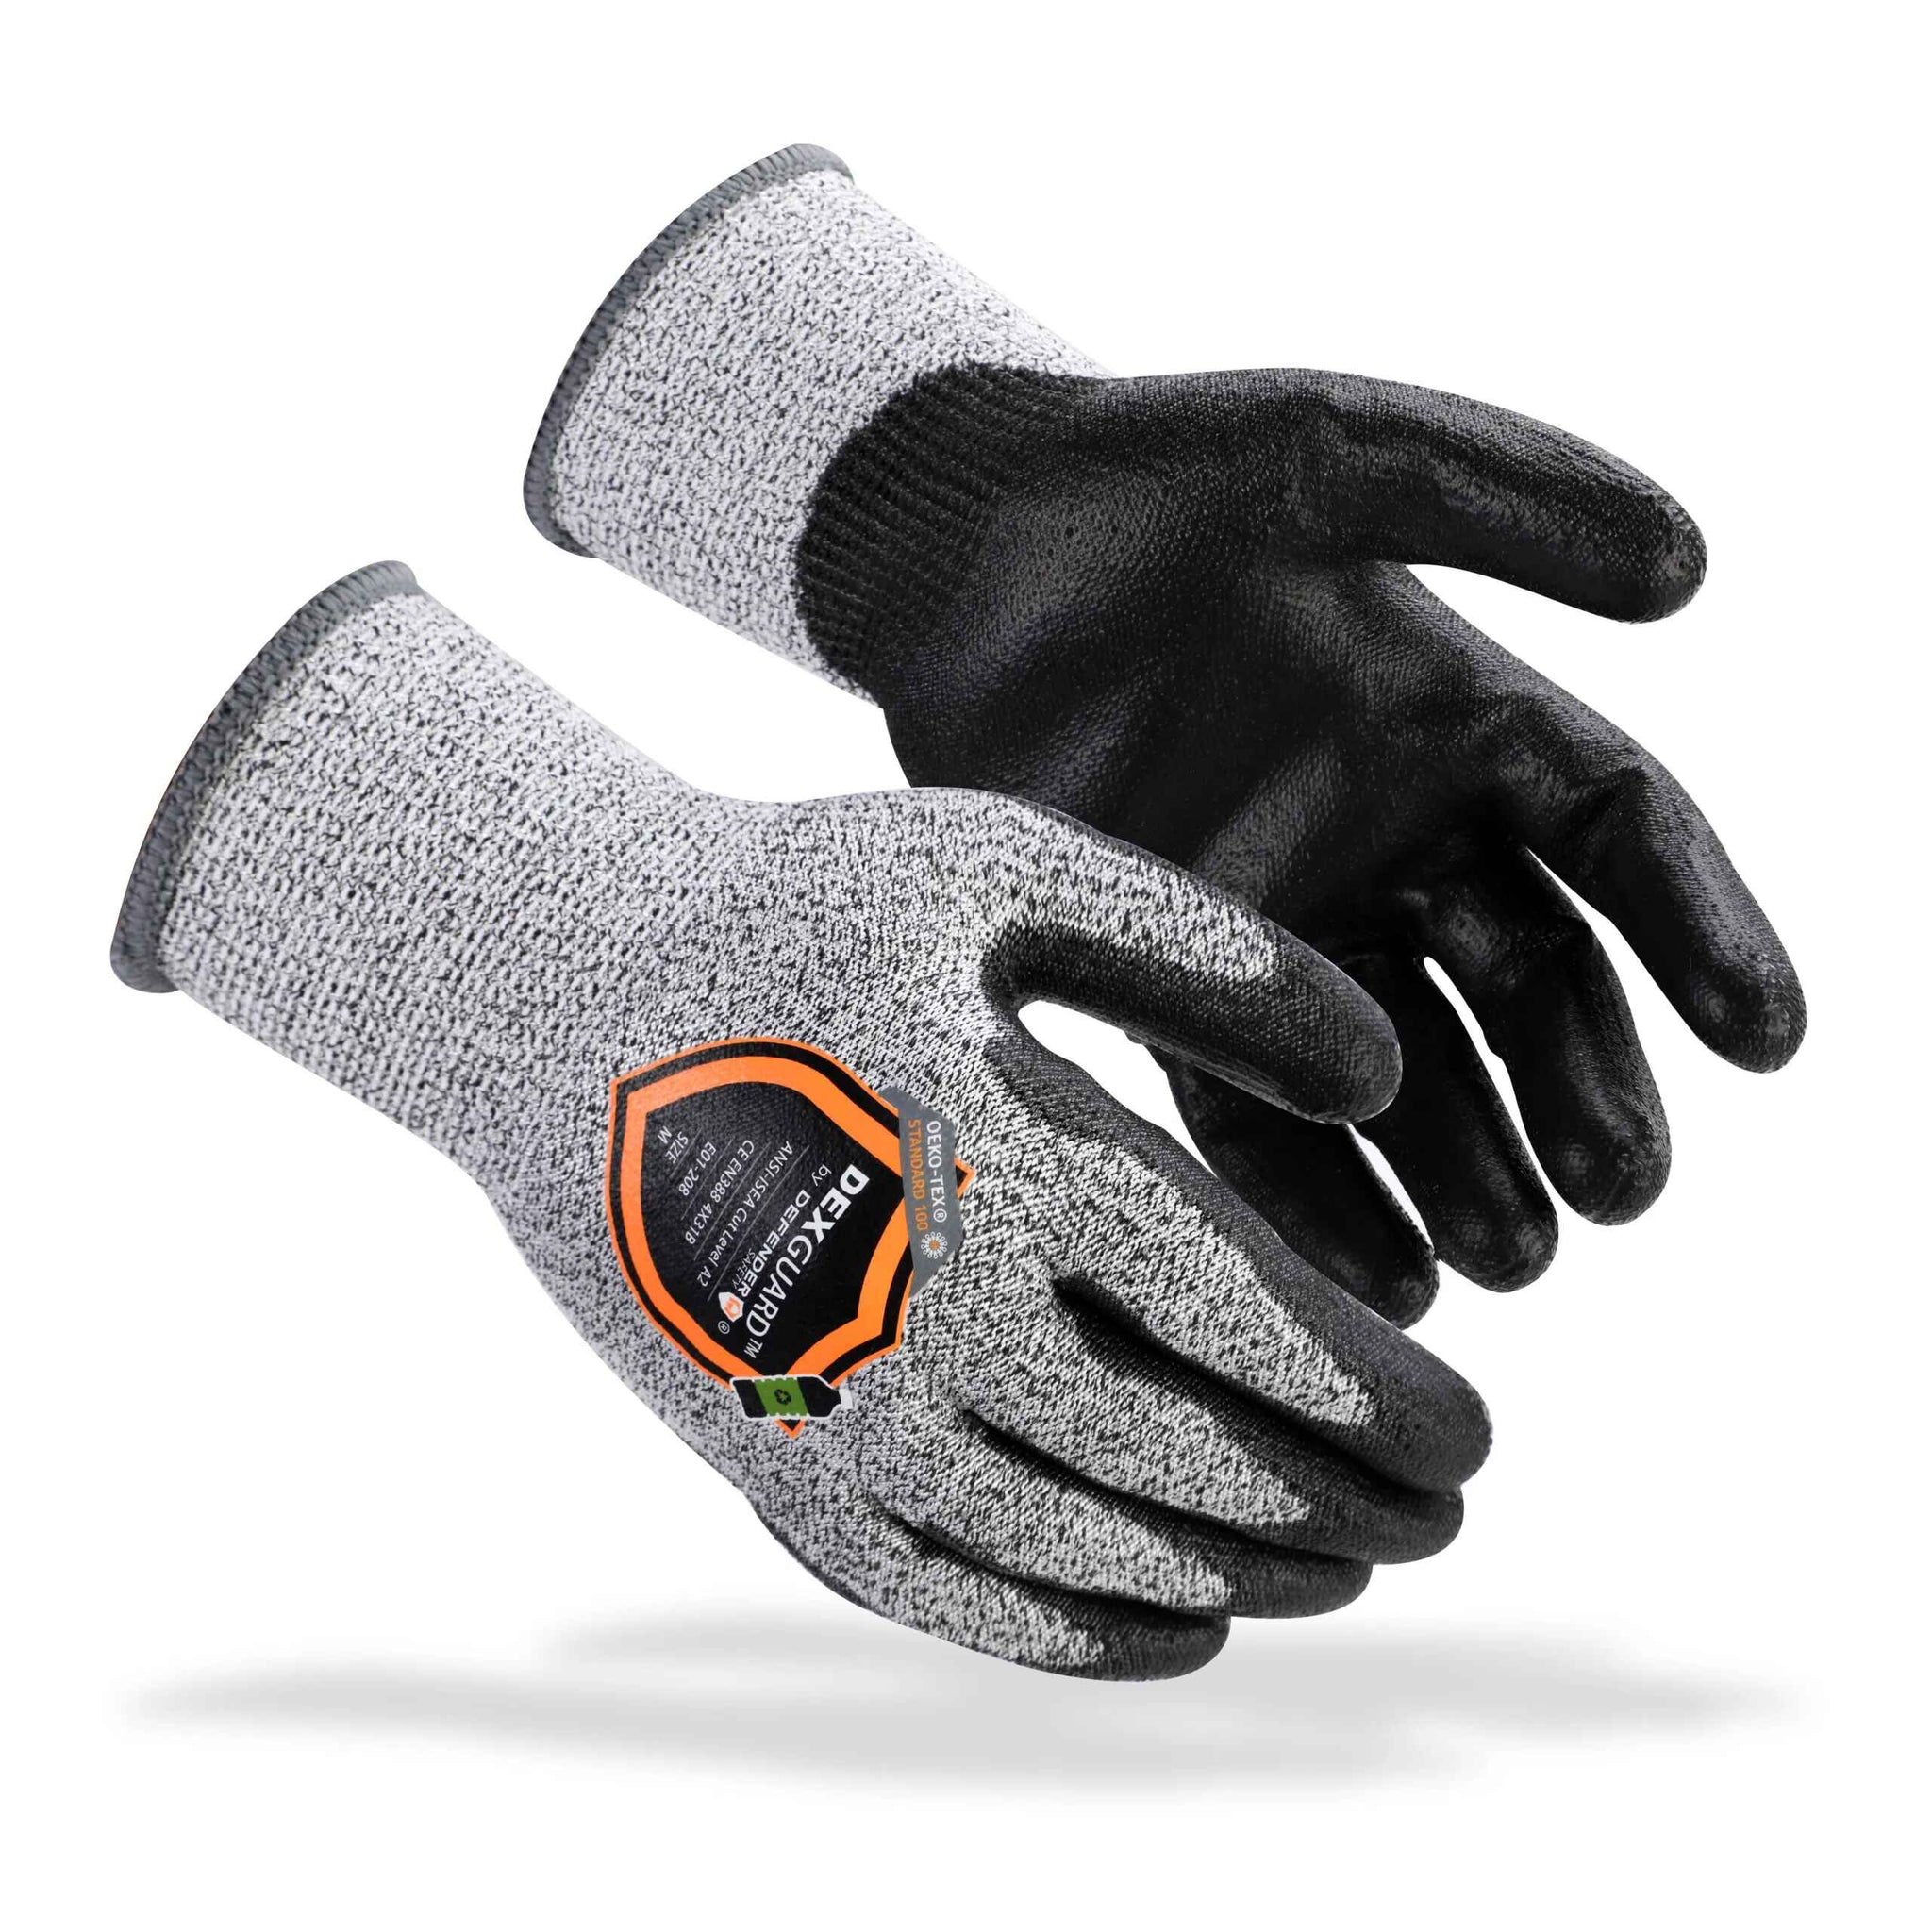 DEXGUARD A2 Cut Glove, Level 4 Abrasion Resistant, Polyurethane Coated Defender Safety, Medium / 1 Pair